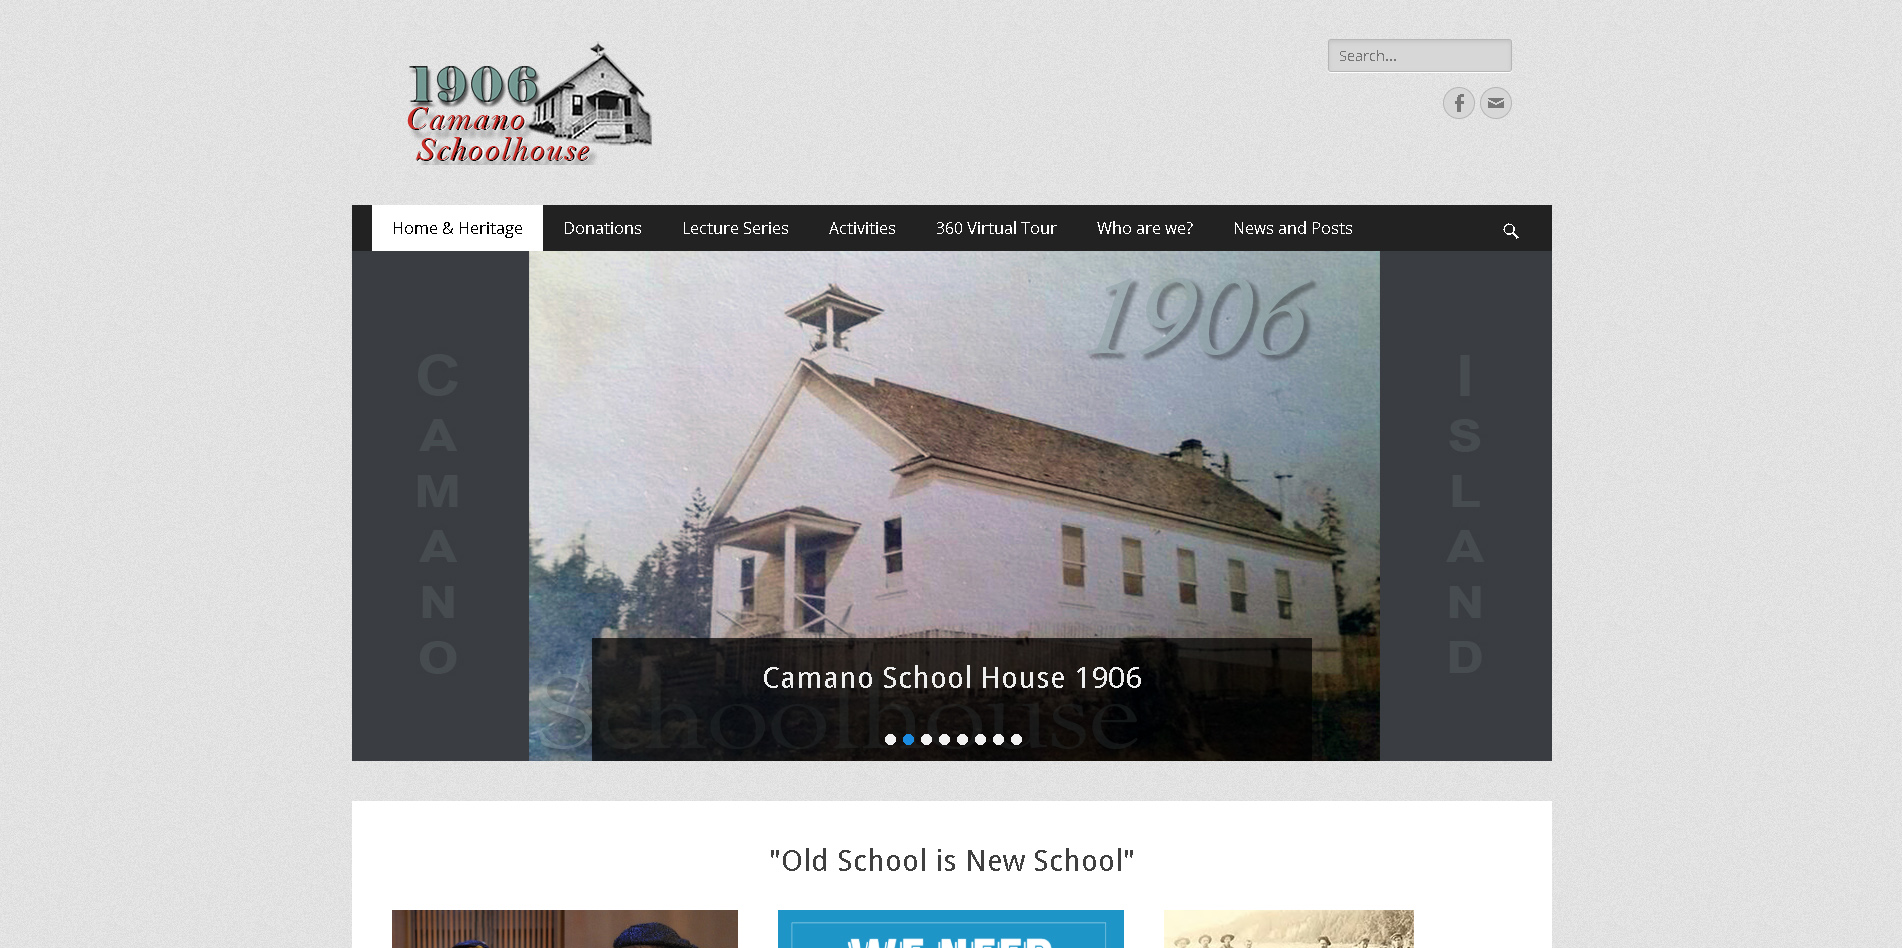 1906 Camano Island Schoolhouse